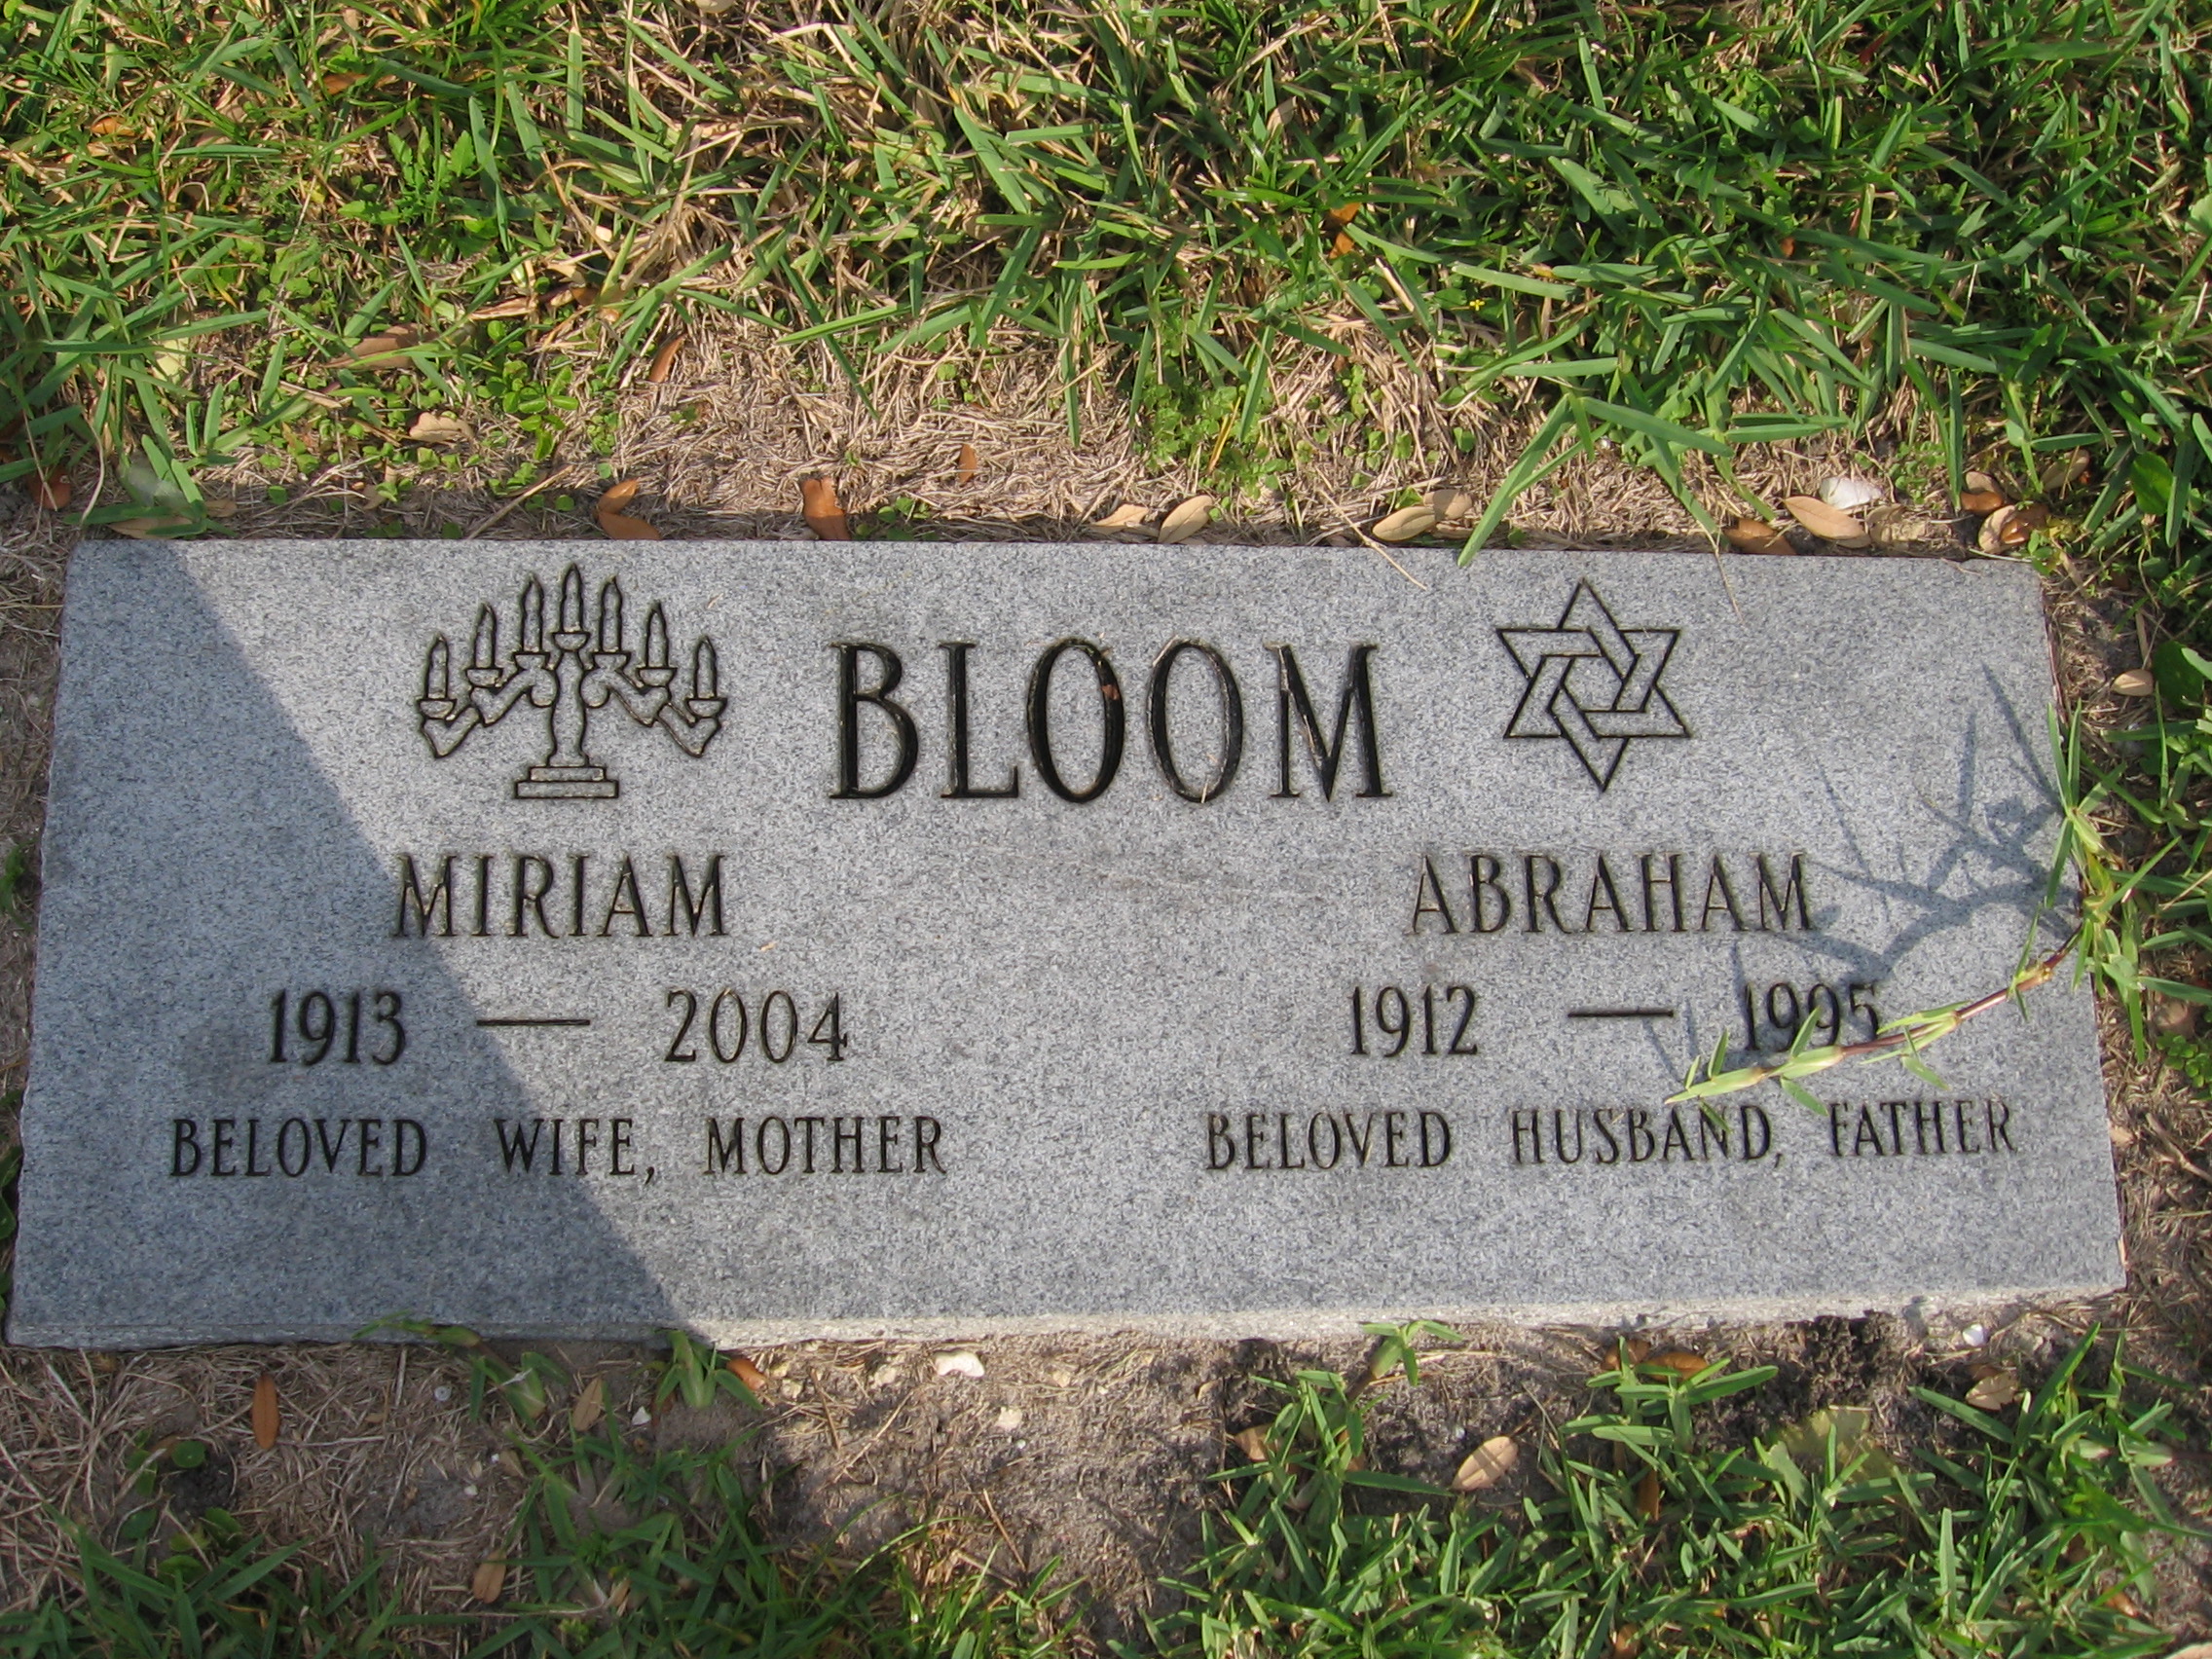 Abraham Bloom